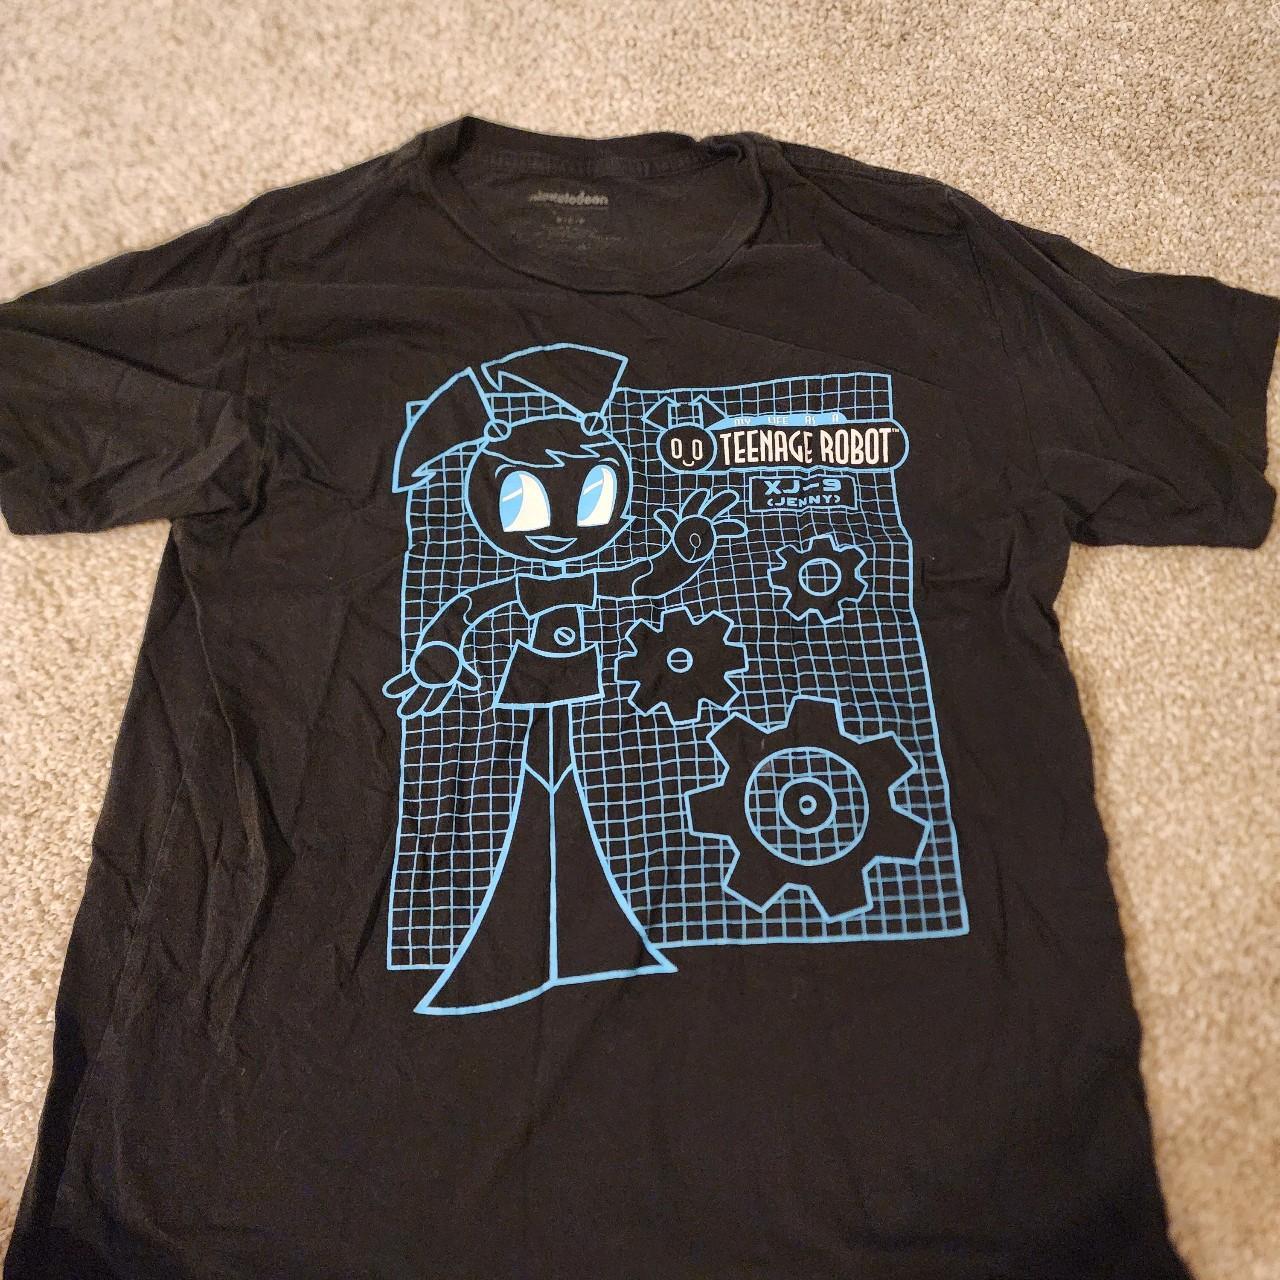 Teenage robot nickelodeon shirt S - print is... - Depop